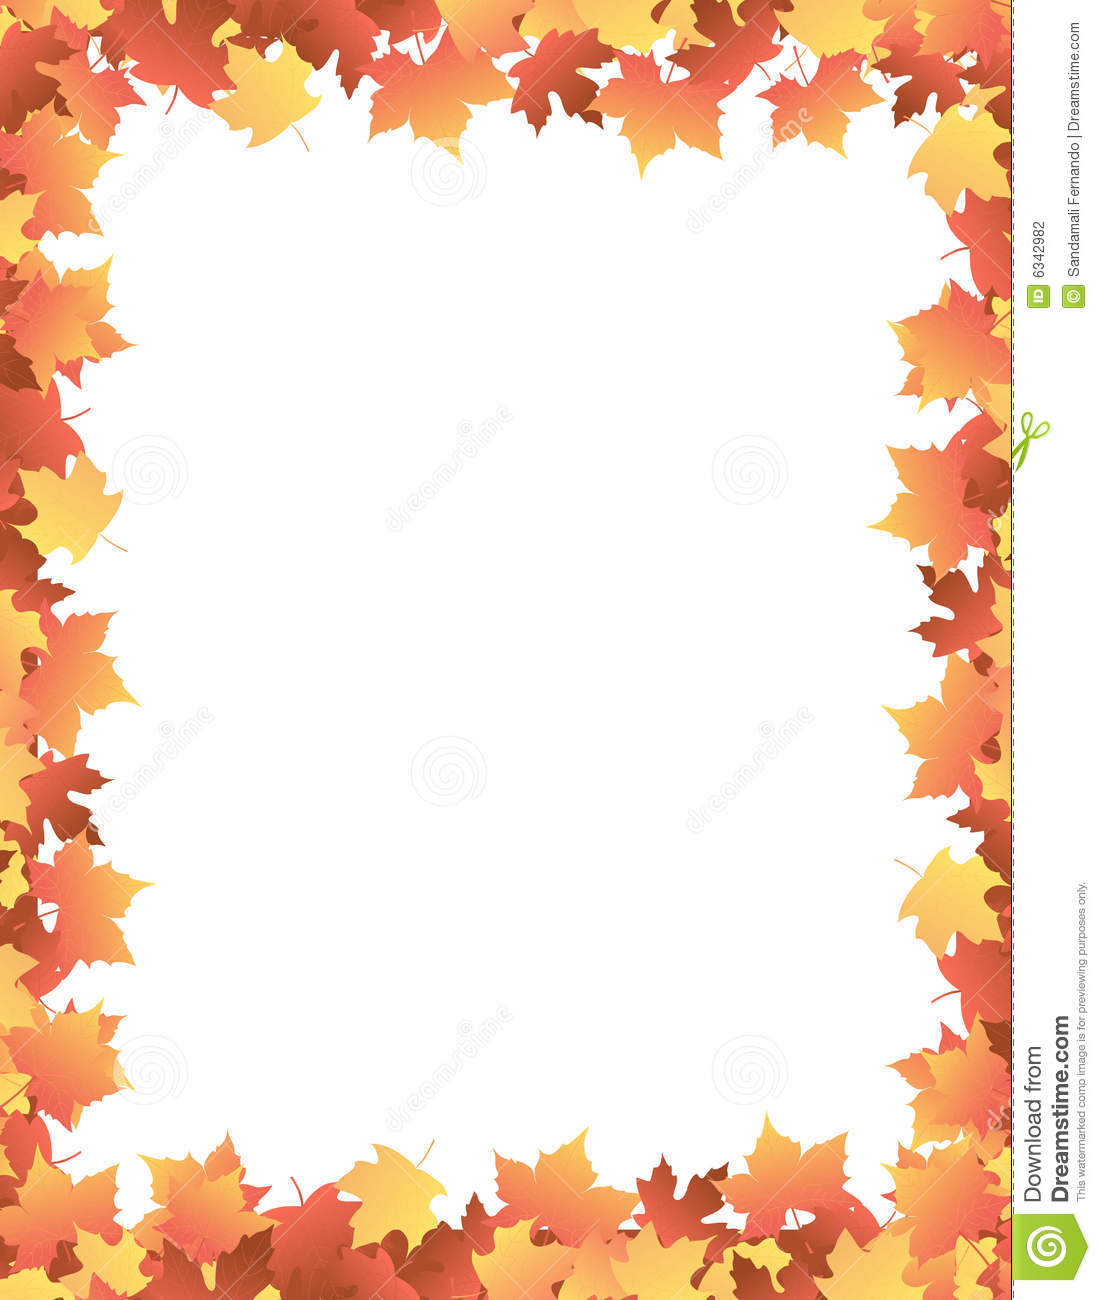 Maple Leaves Falling Background   Border   Frame Illustration